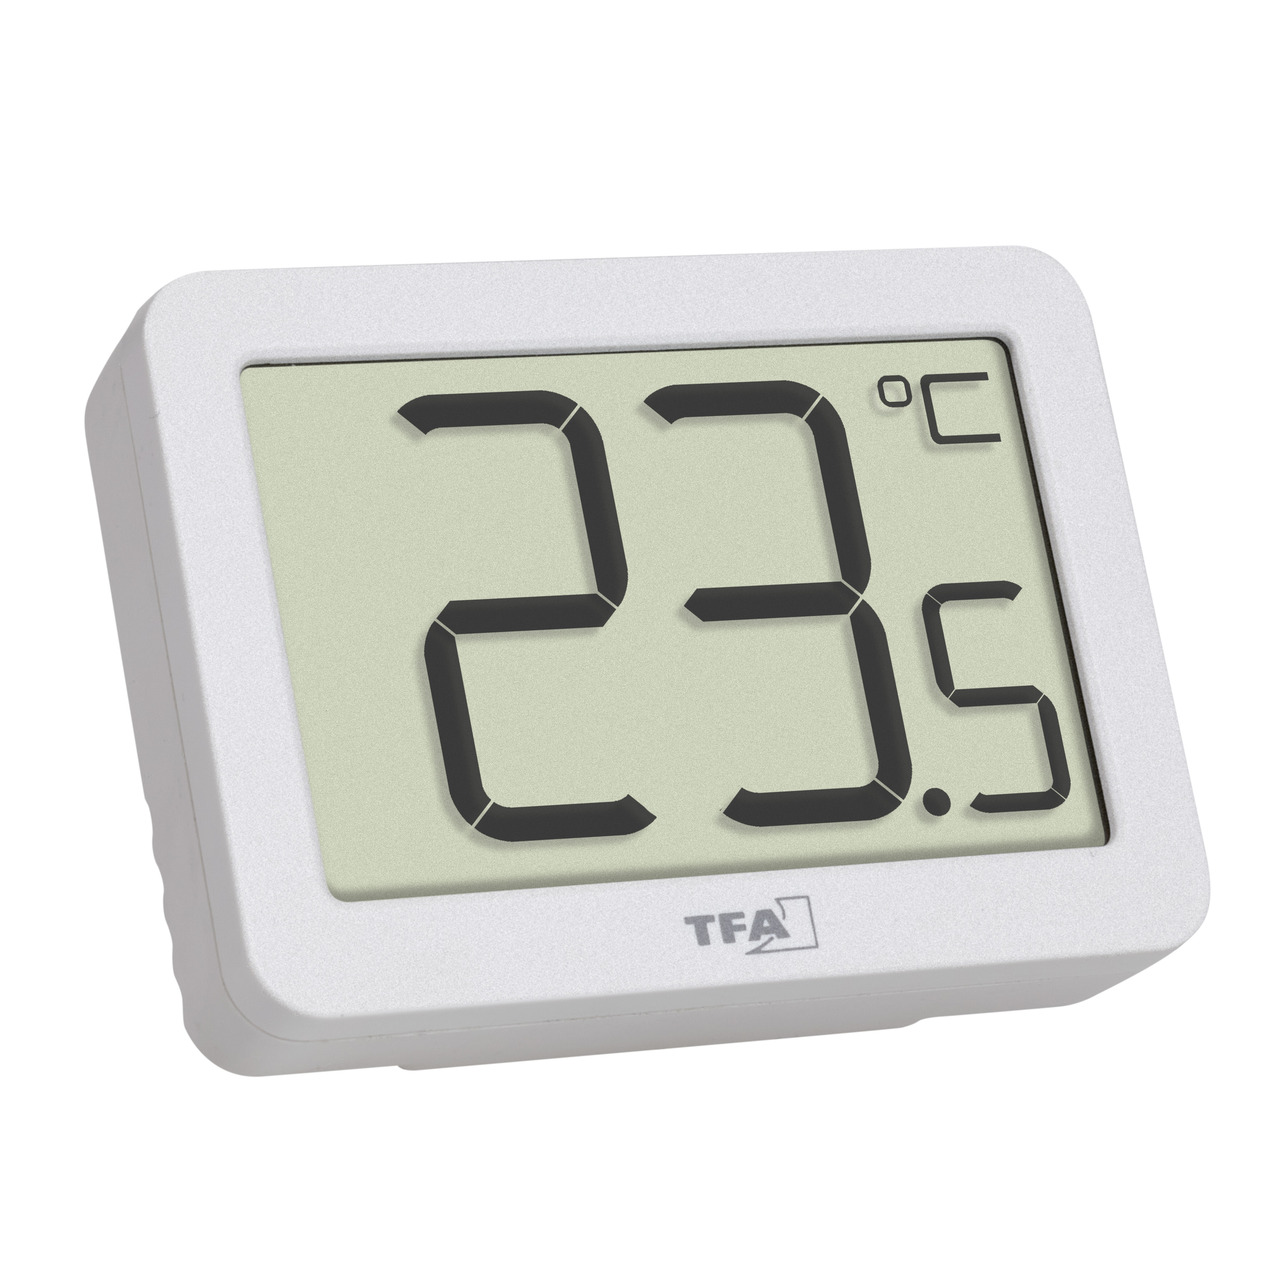 TFA Digitales Thermometer fr Raumtemperatur-Erfassung- Magnetmontage- kompakt- weiss